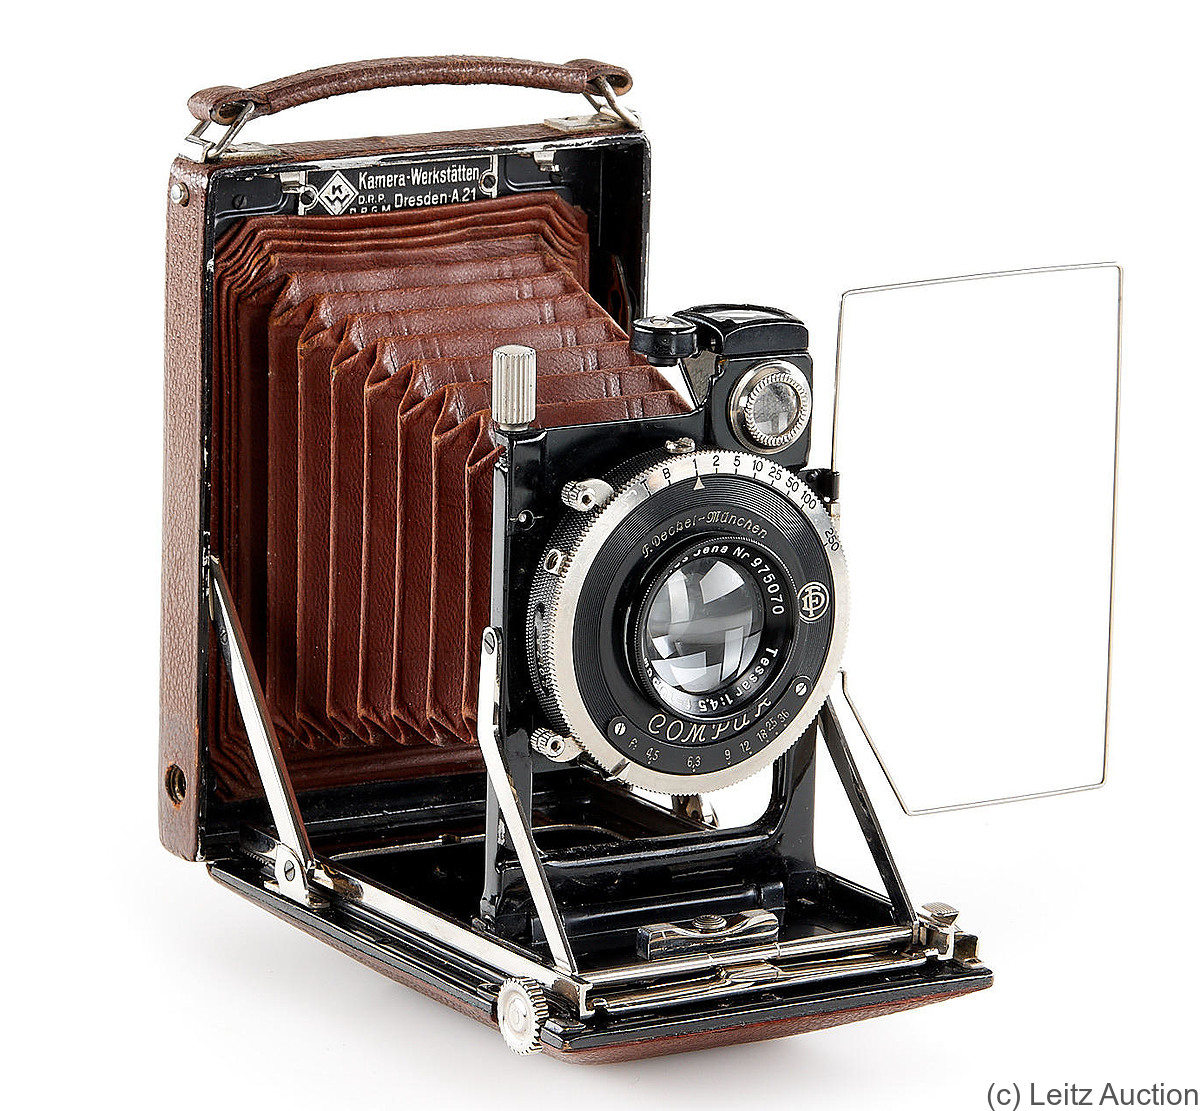 KW (KameraWerkstatten): Patent Etui Luxus (6.5x9) camera